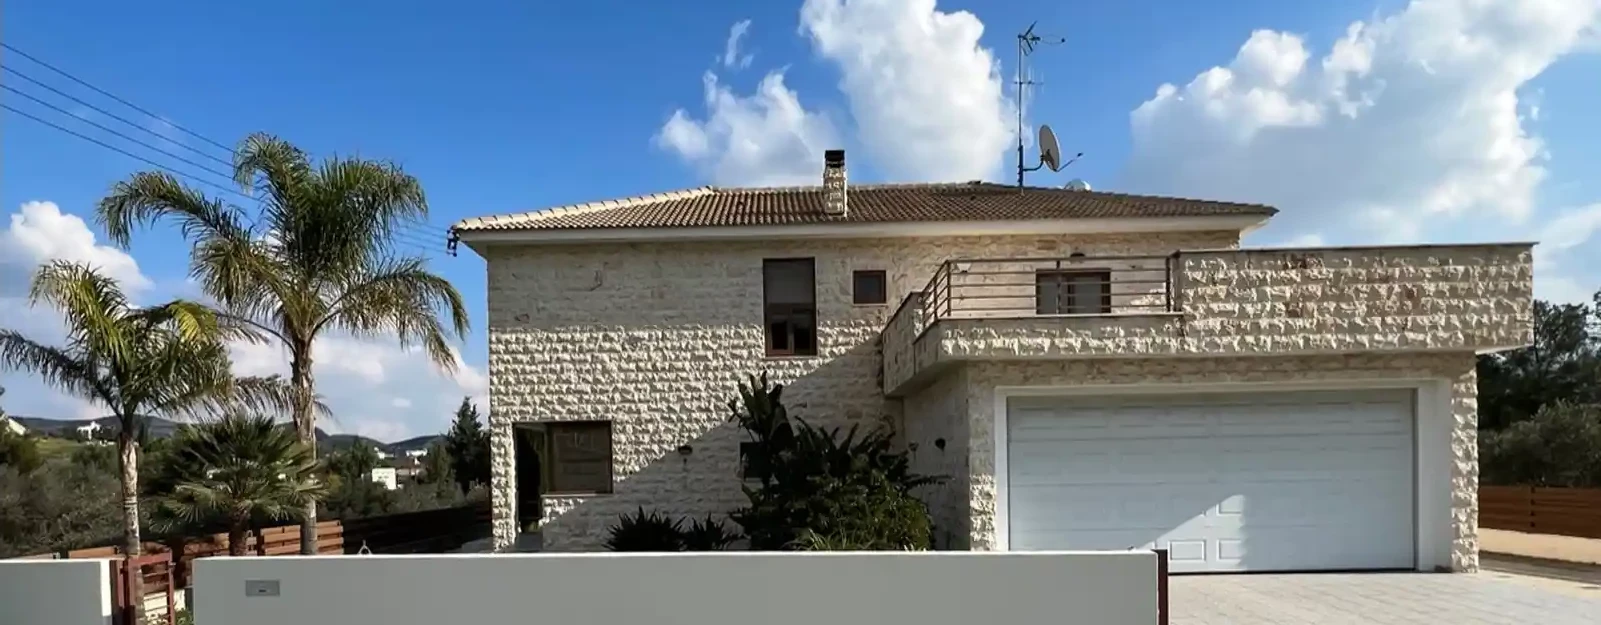 4-bedroom villa fоr sаle €630.000, image 1